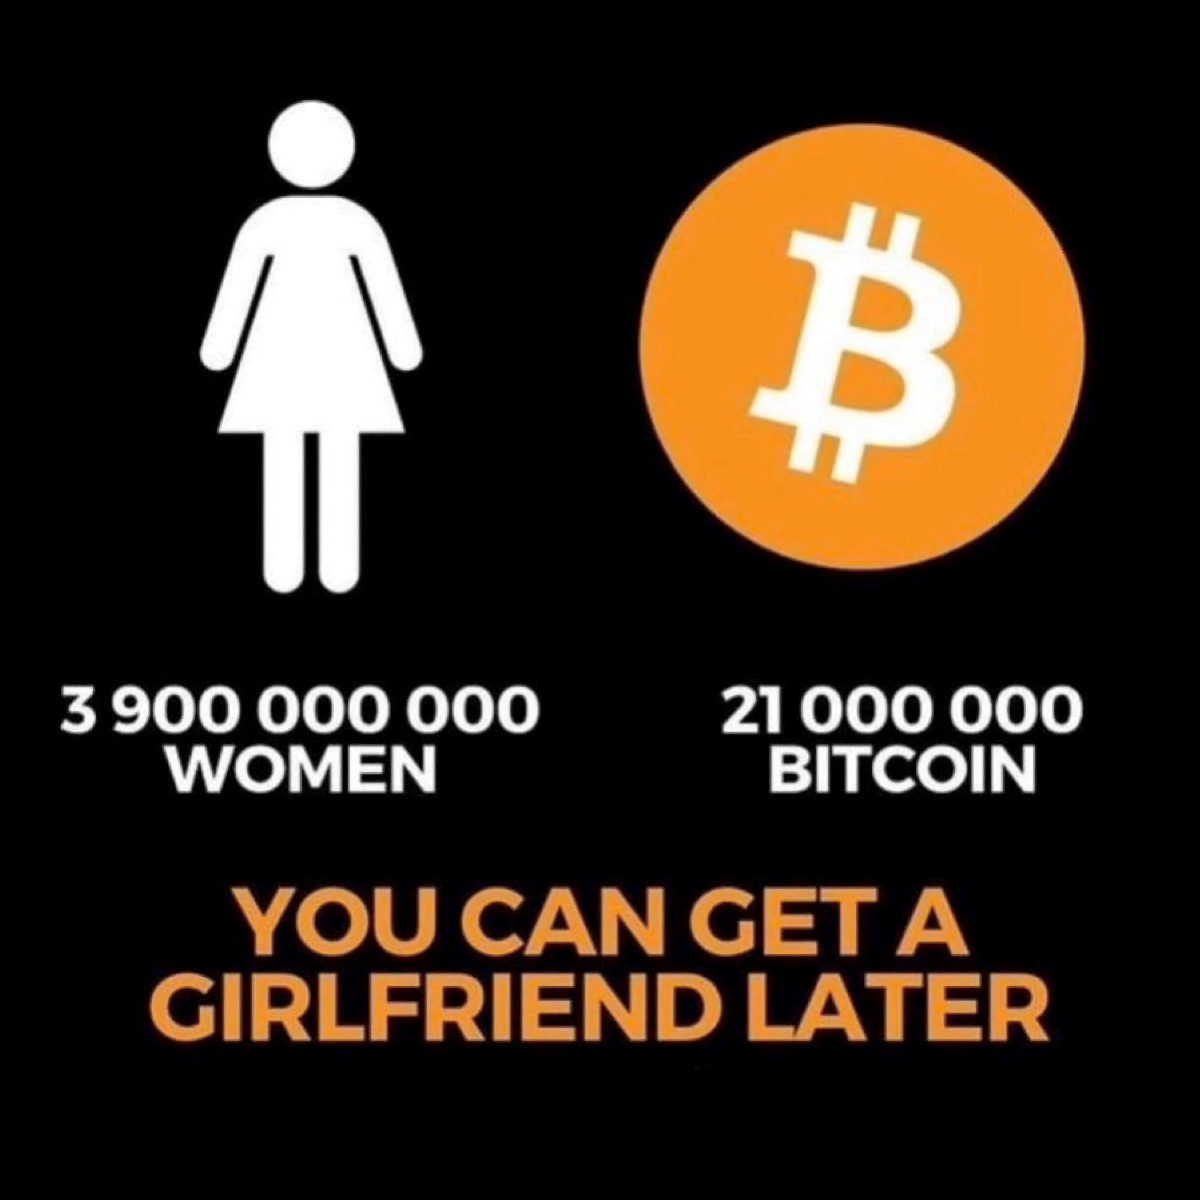 @vikisecrets/memes-of-the-day-bitcoin-vs-girlfriend-svb-inflation-few-understand-gov-ban